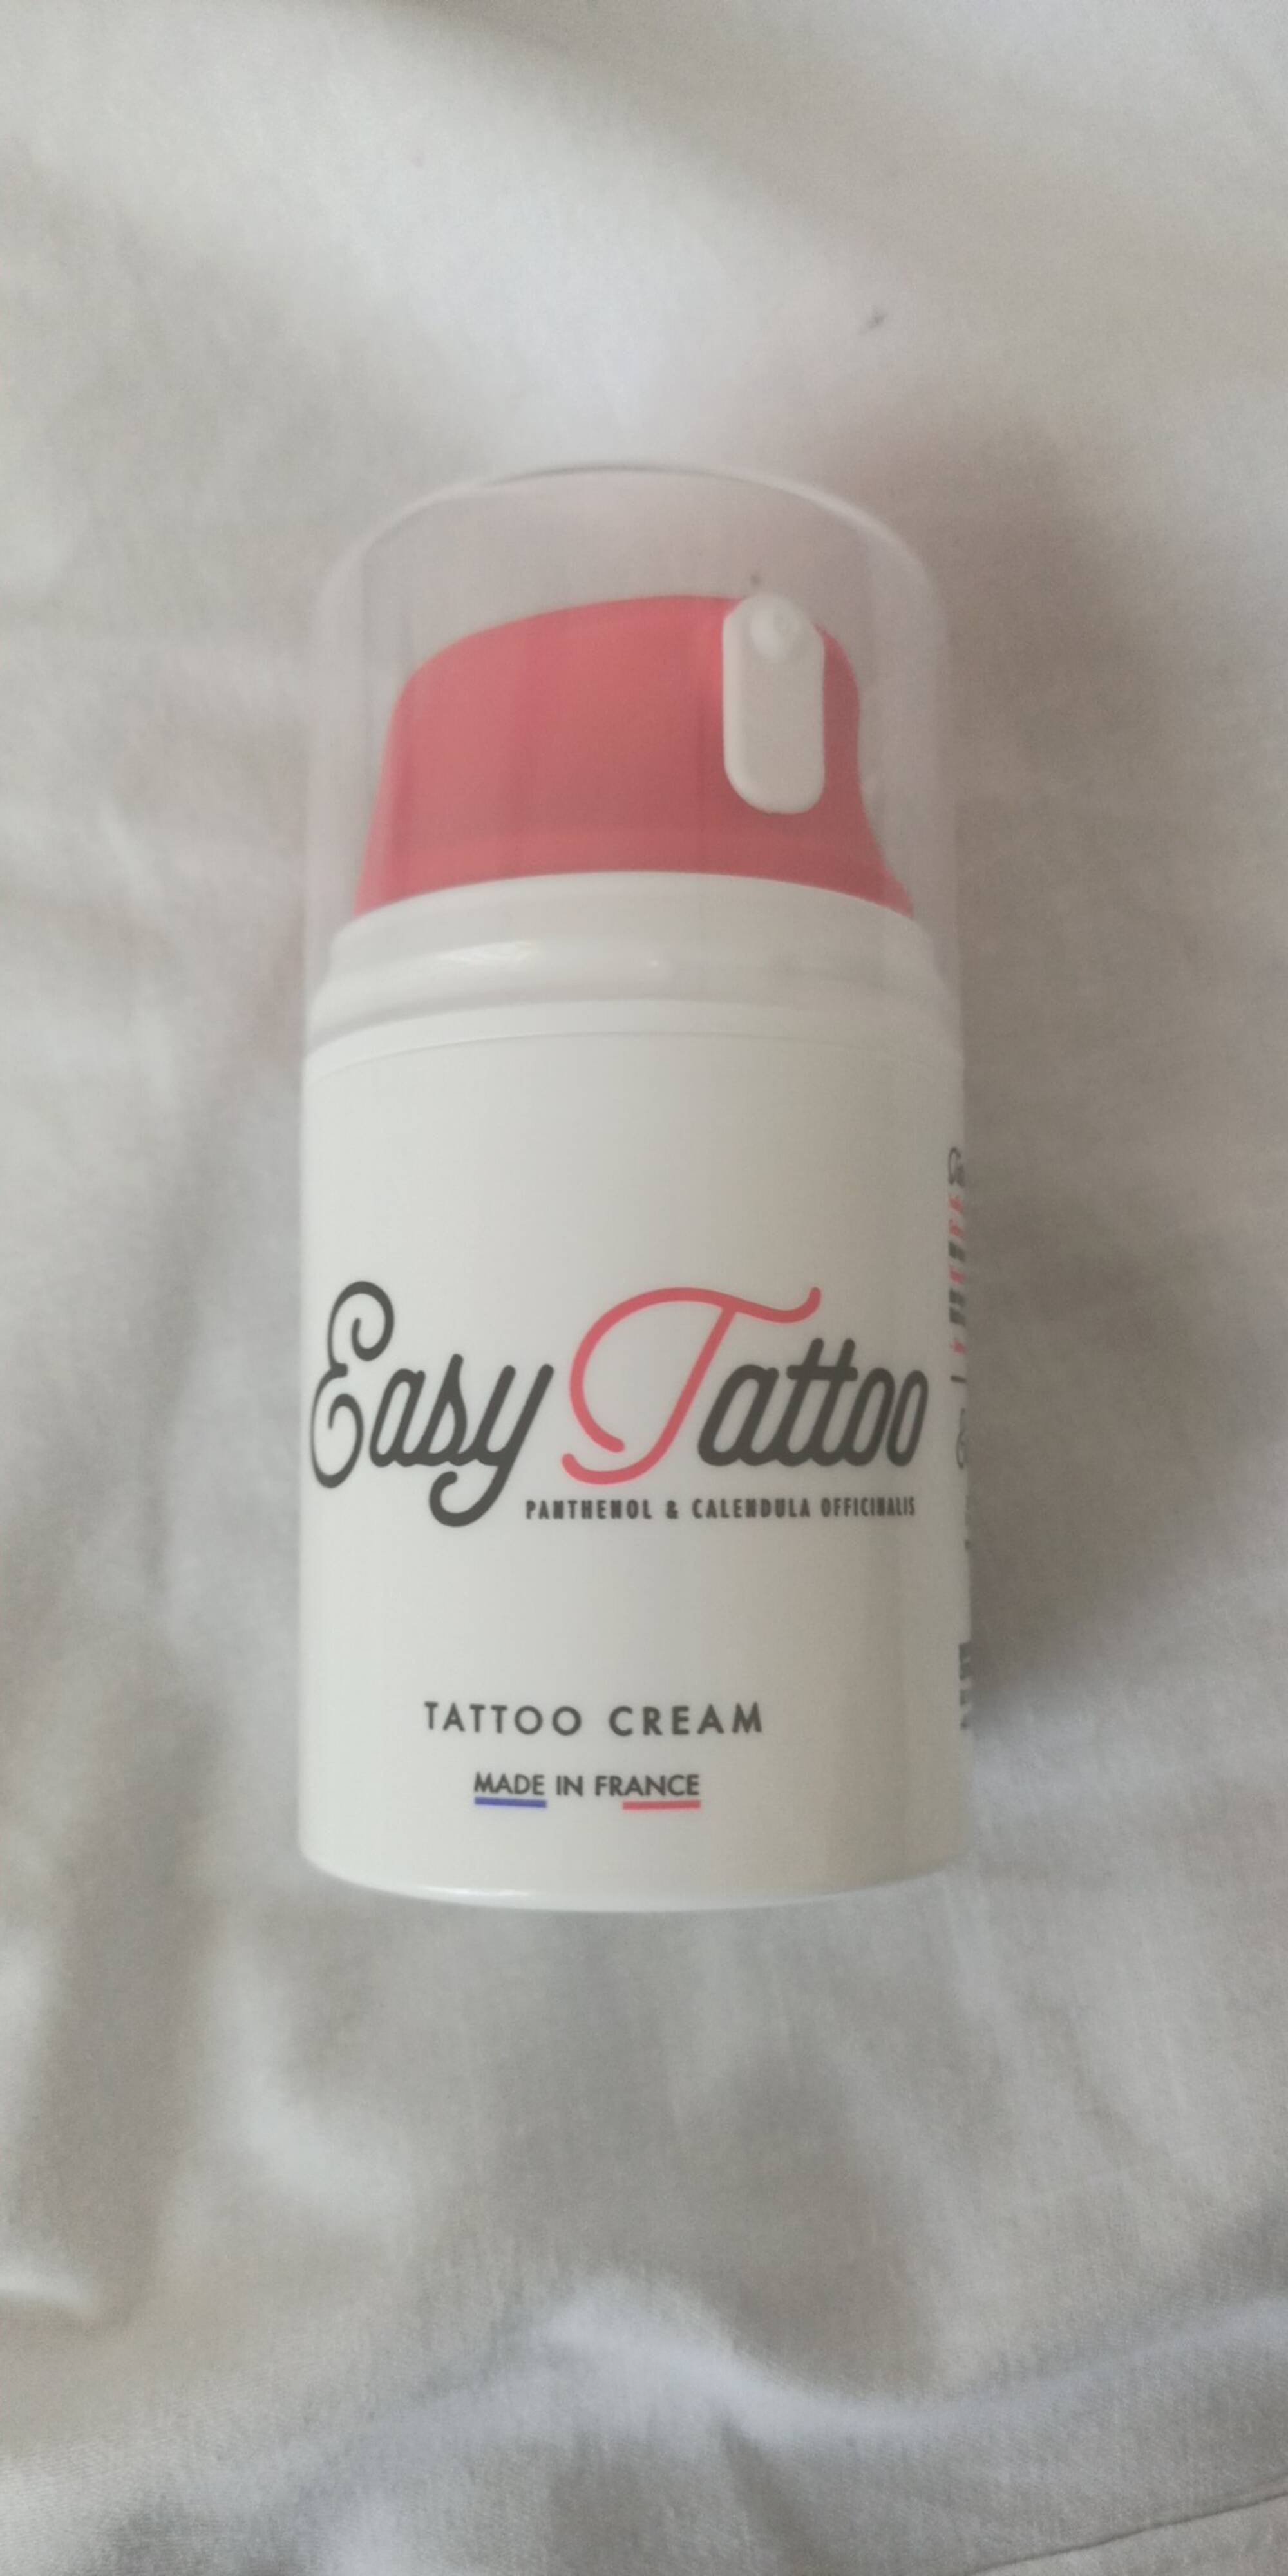 EASY TATTOO - Tattoo cream